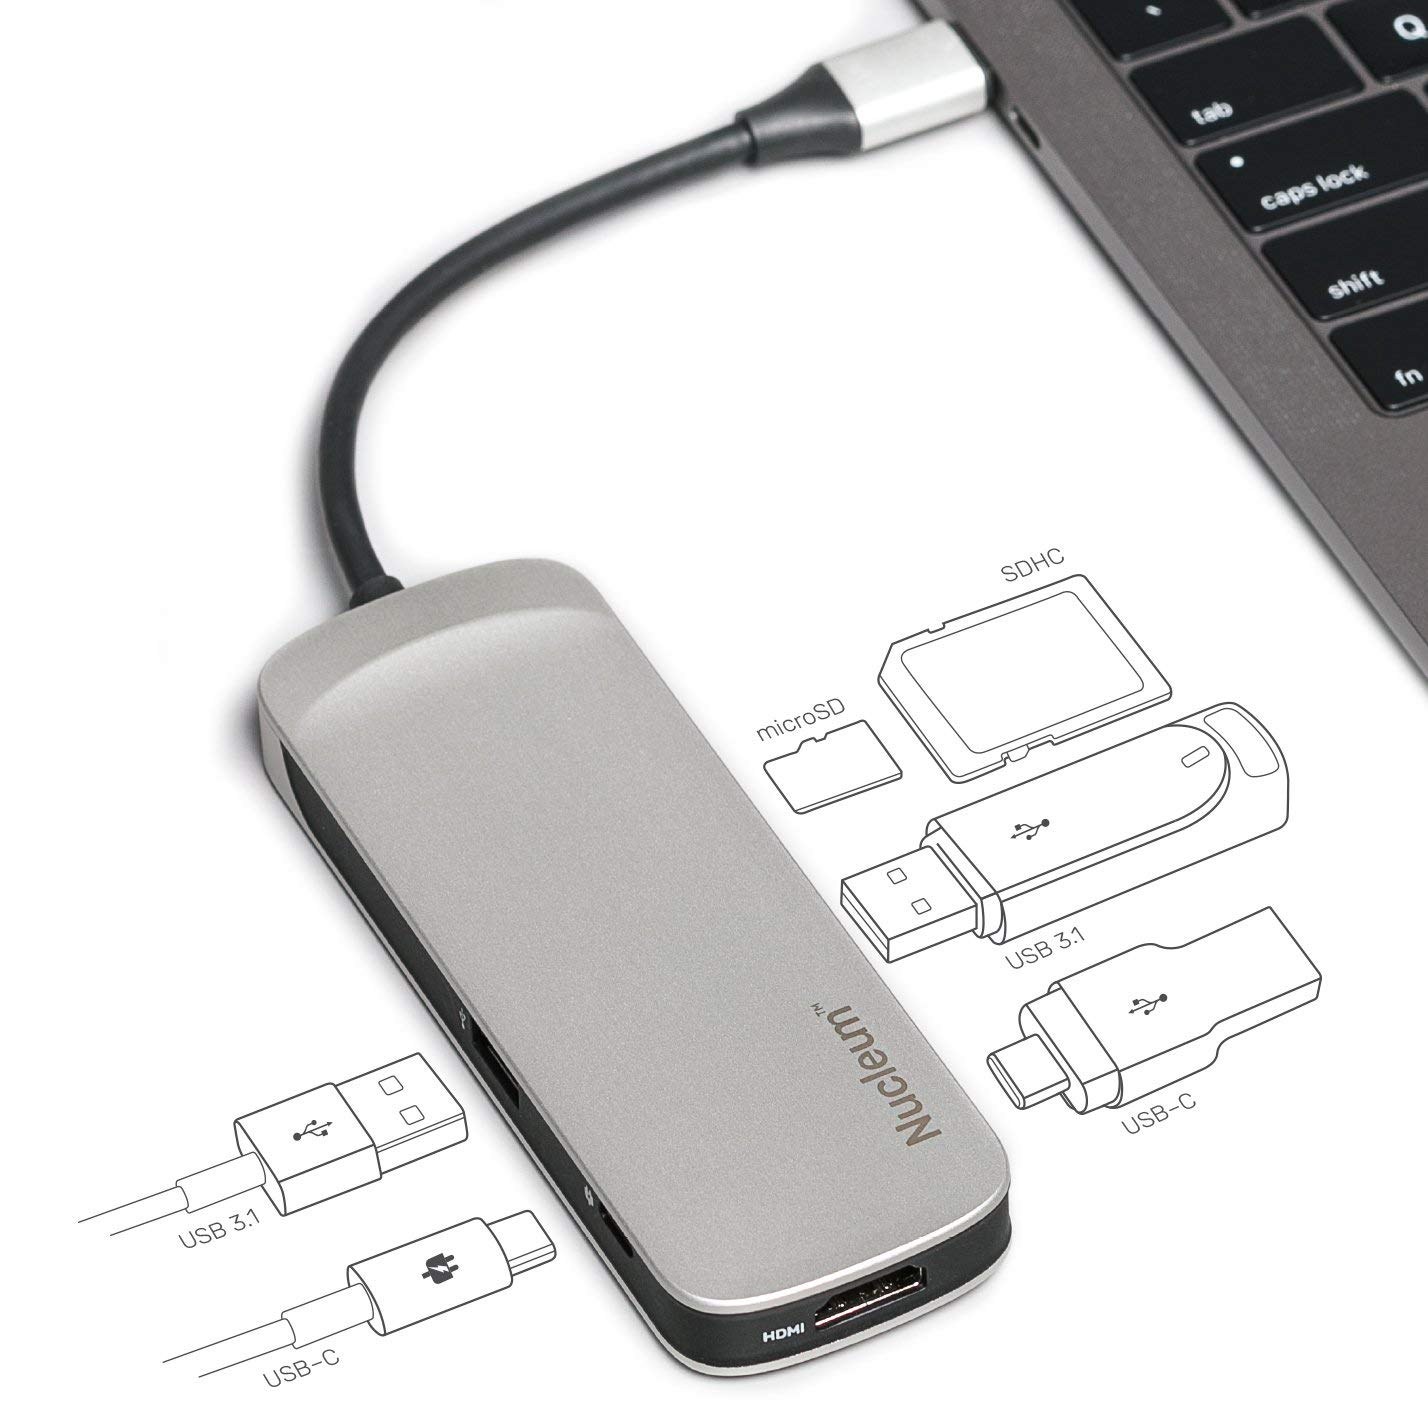 Kingston Nucleum USB C Hub, adaptador tipo C Conecte USB 3.0, HDMI, SD / microSD, Power Pass Through para MacBook Pro y otros dispositivos con puerto USB tipo C